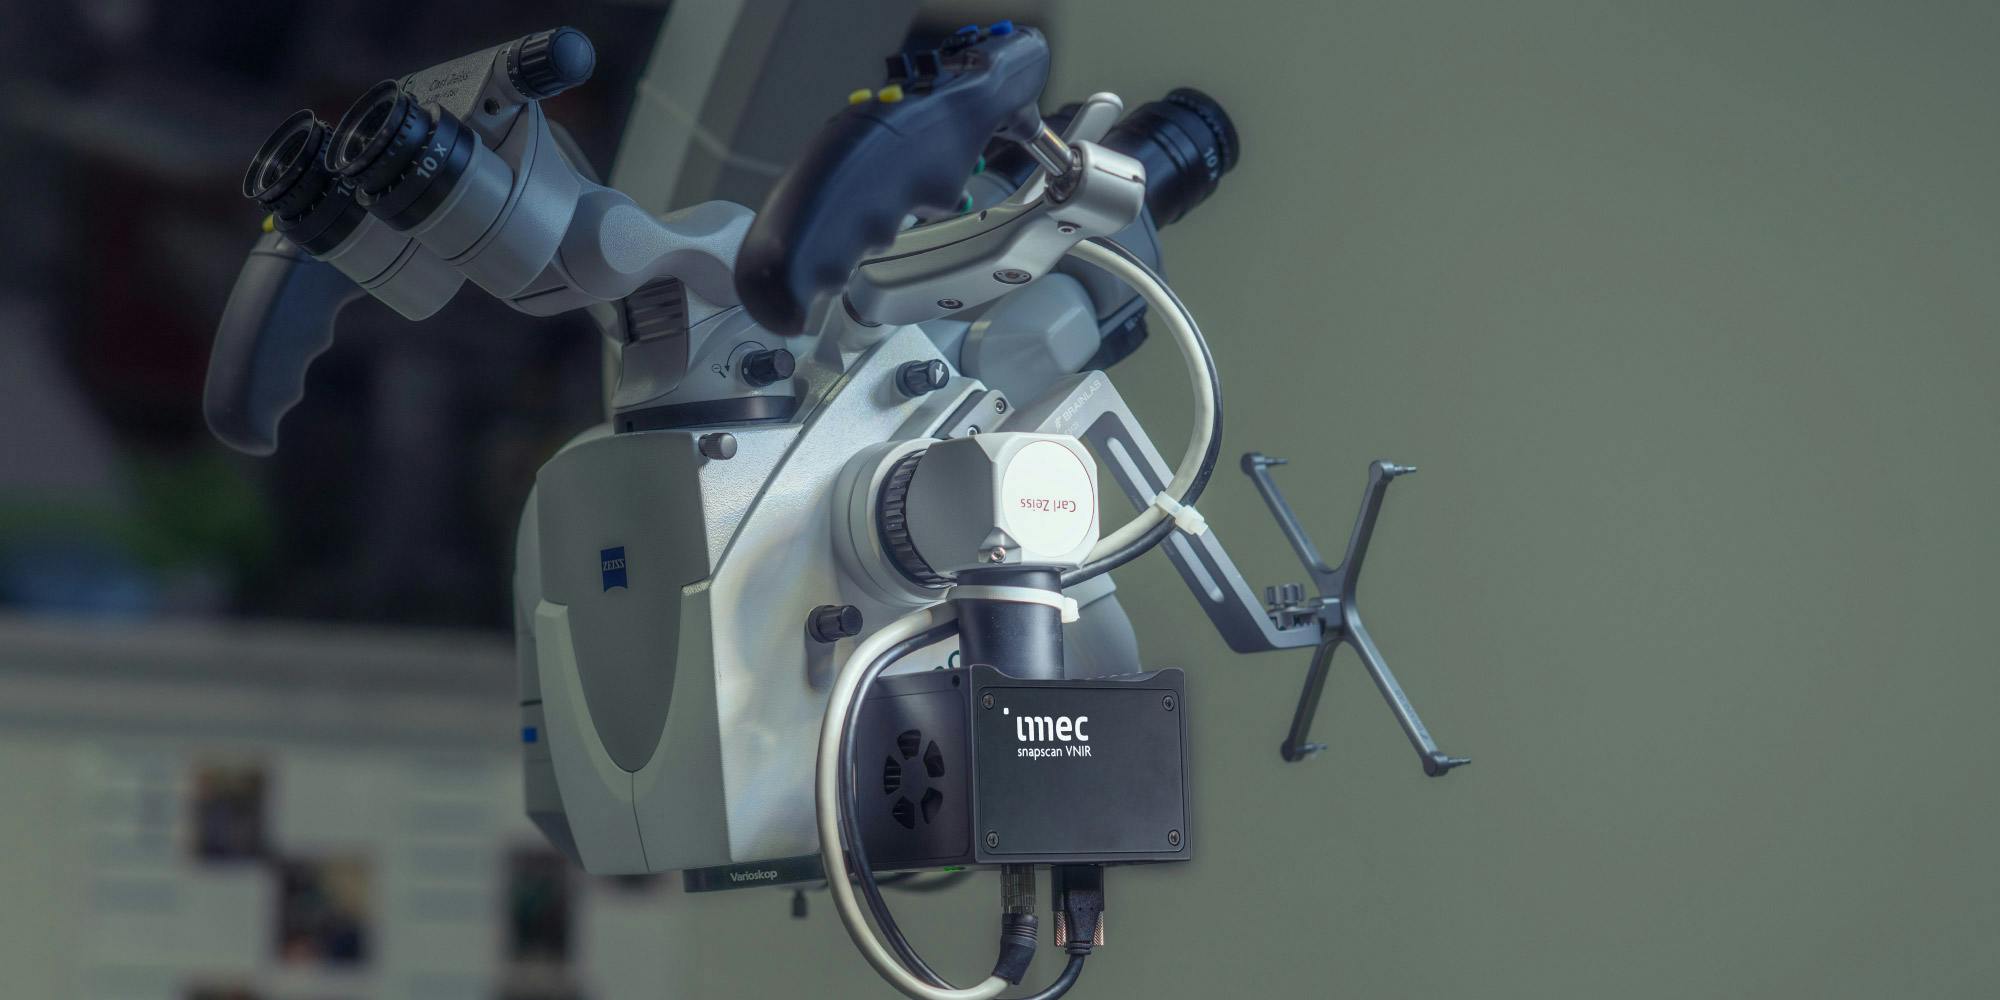 Imec's snapscan VNIR 150 camera mounted on a surgical microscope